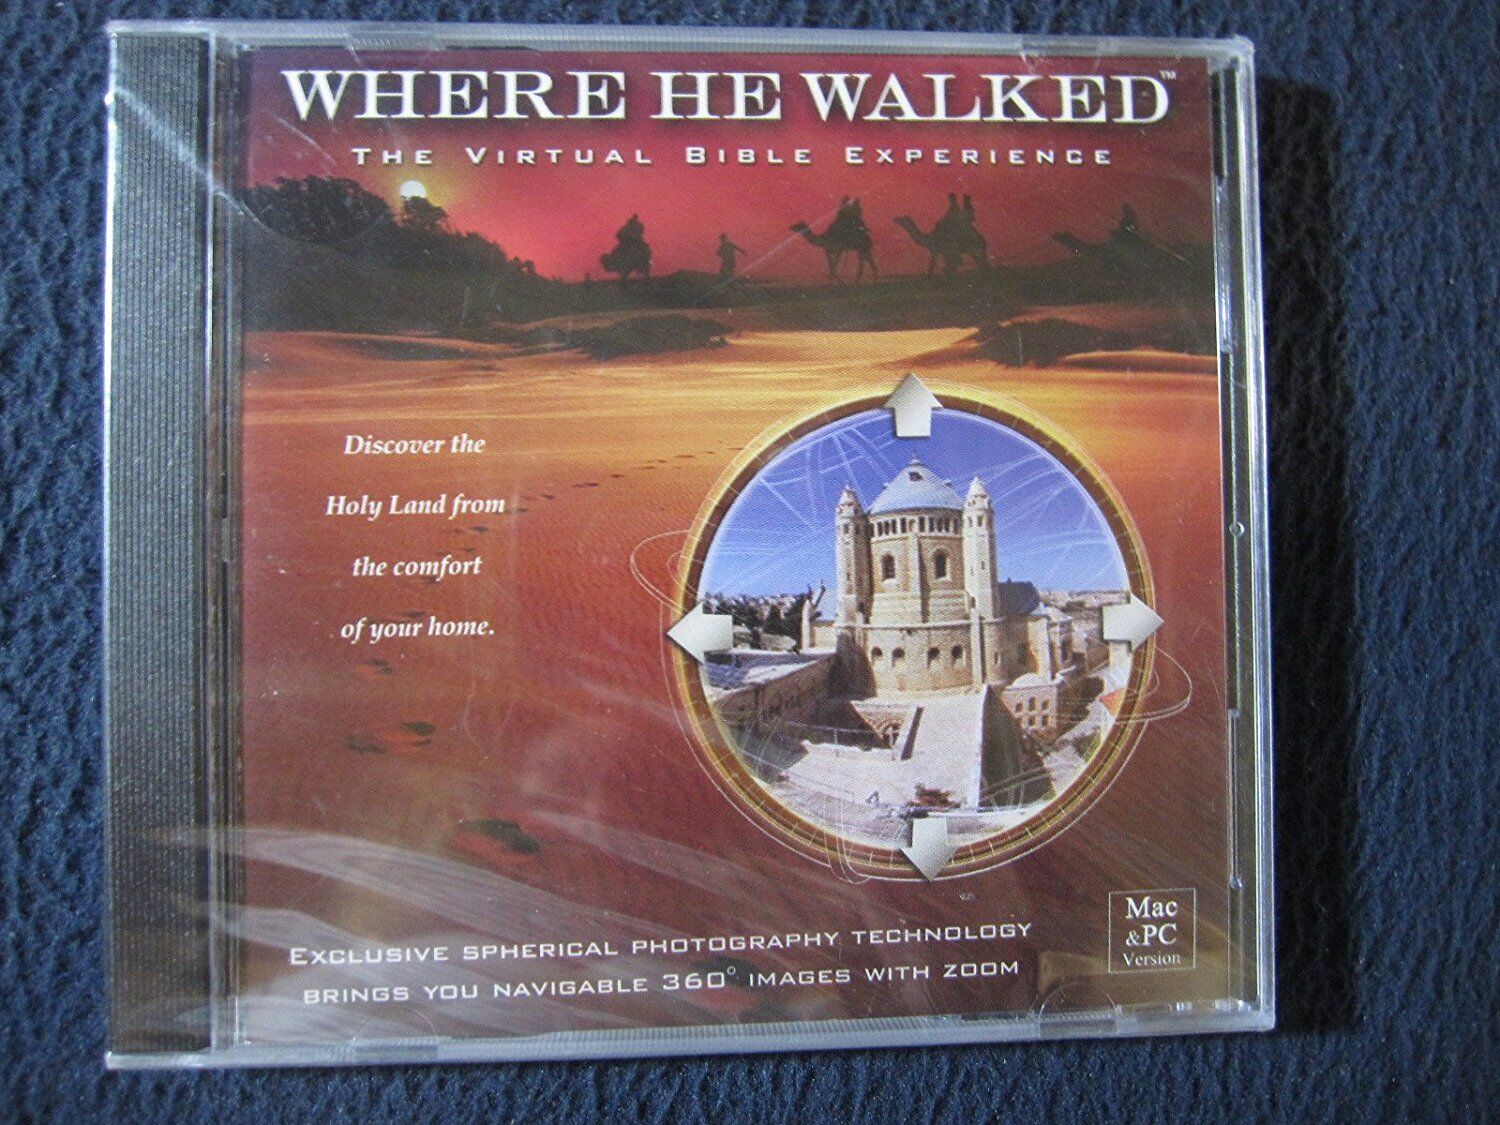 Where He Walked: The Virtual Bible Experience [CD-ROM] Windows XP / Mac OS X